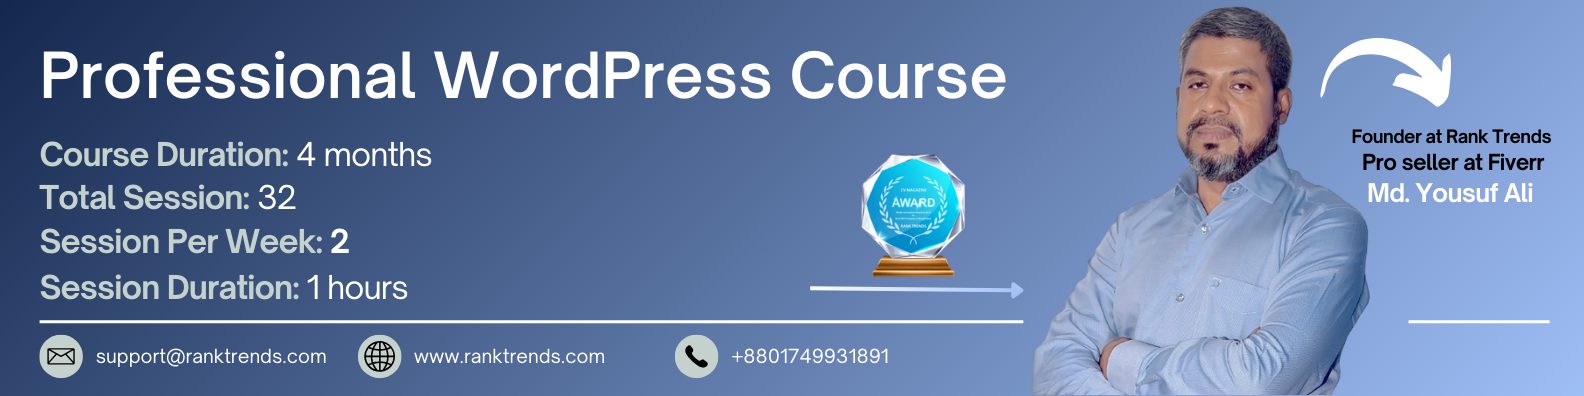 rank-trends-professional-wordpress-course